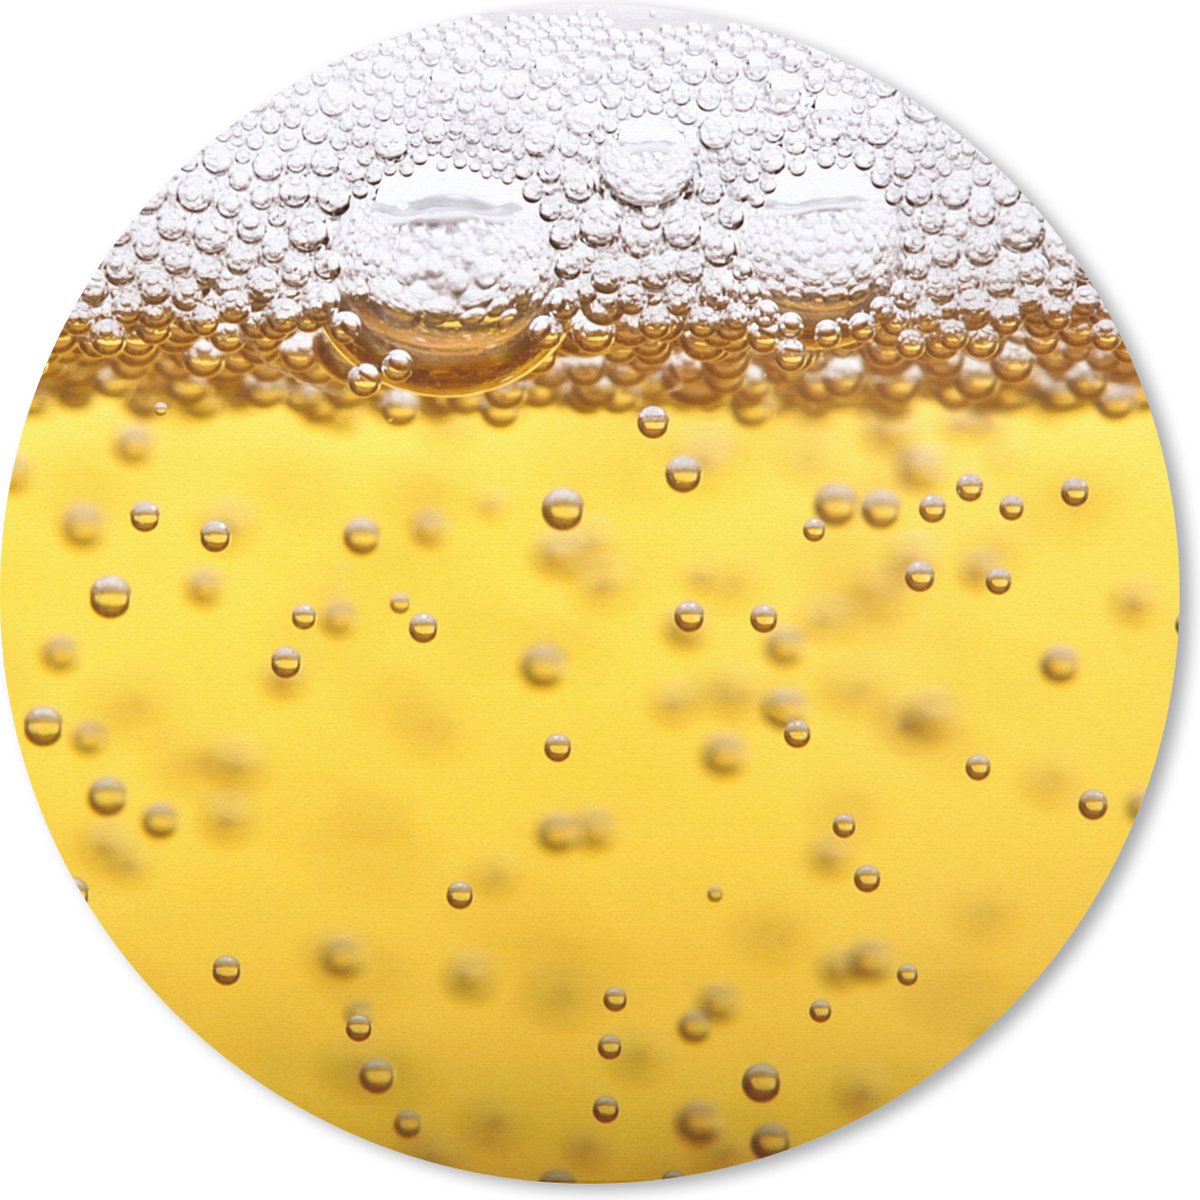 Muismat - Mousepad - Rond - Bierbubbels in glas met bier - 30x30 cm - Ronde muismat